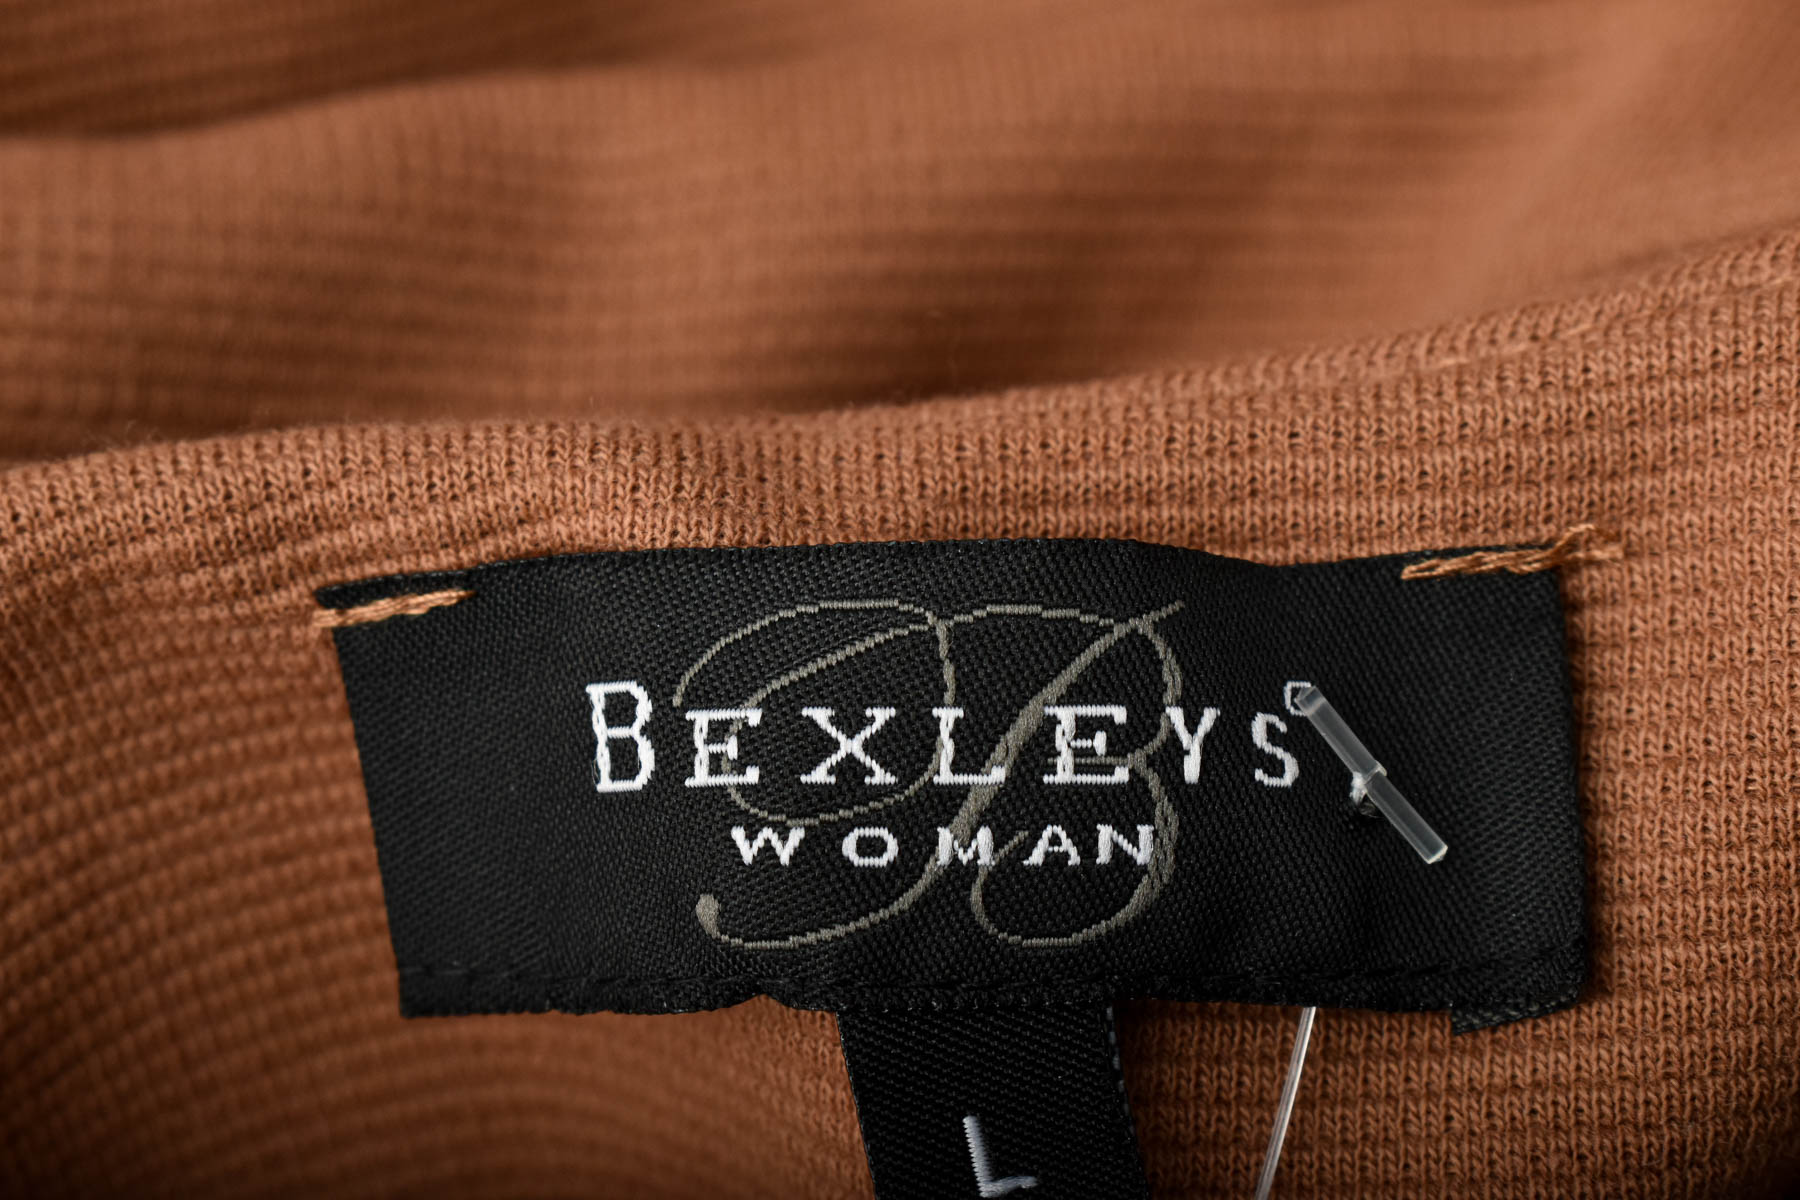 Cardigan / Jachetă de damă - Bexleys - 2